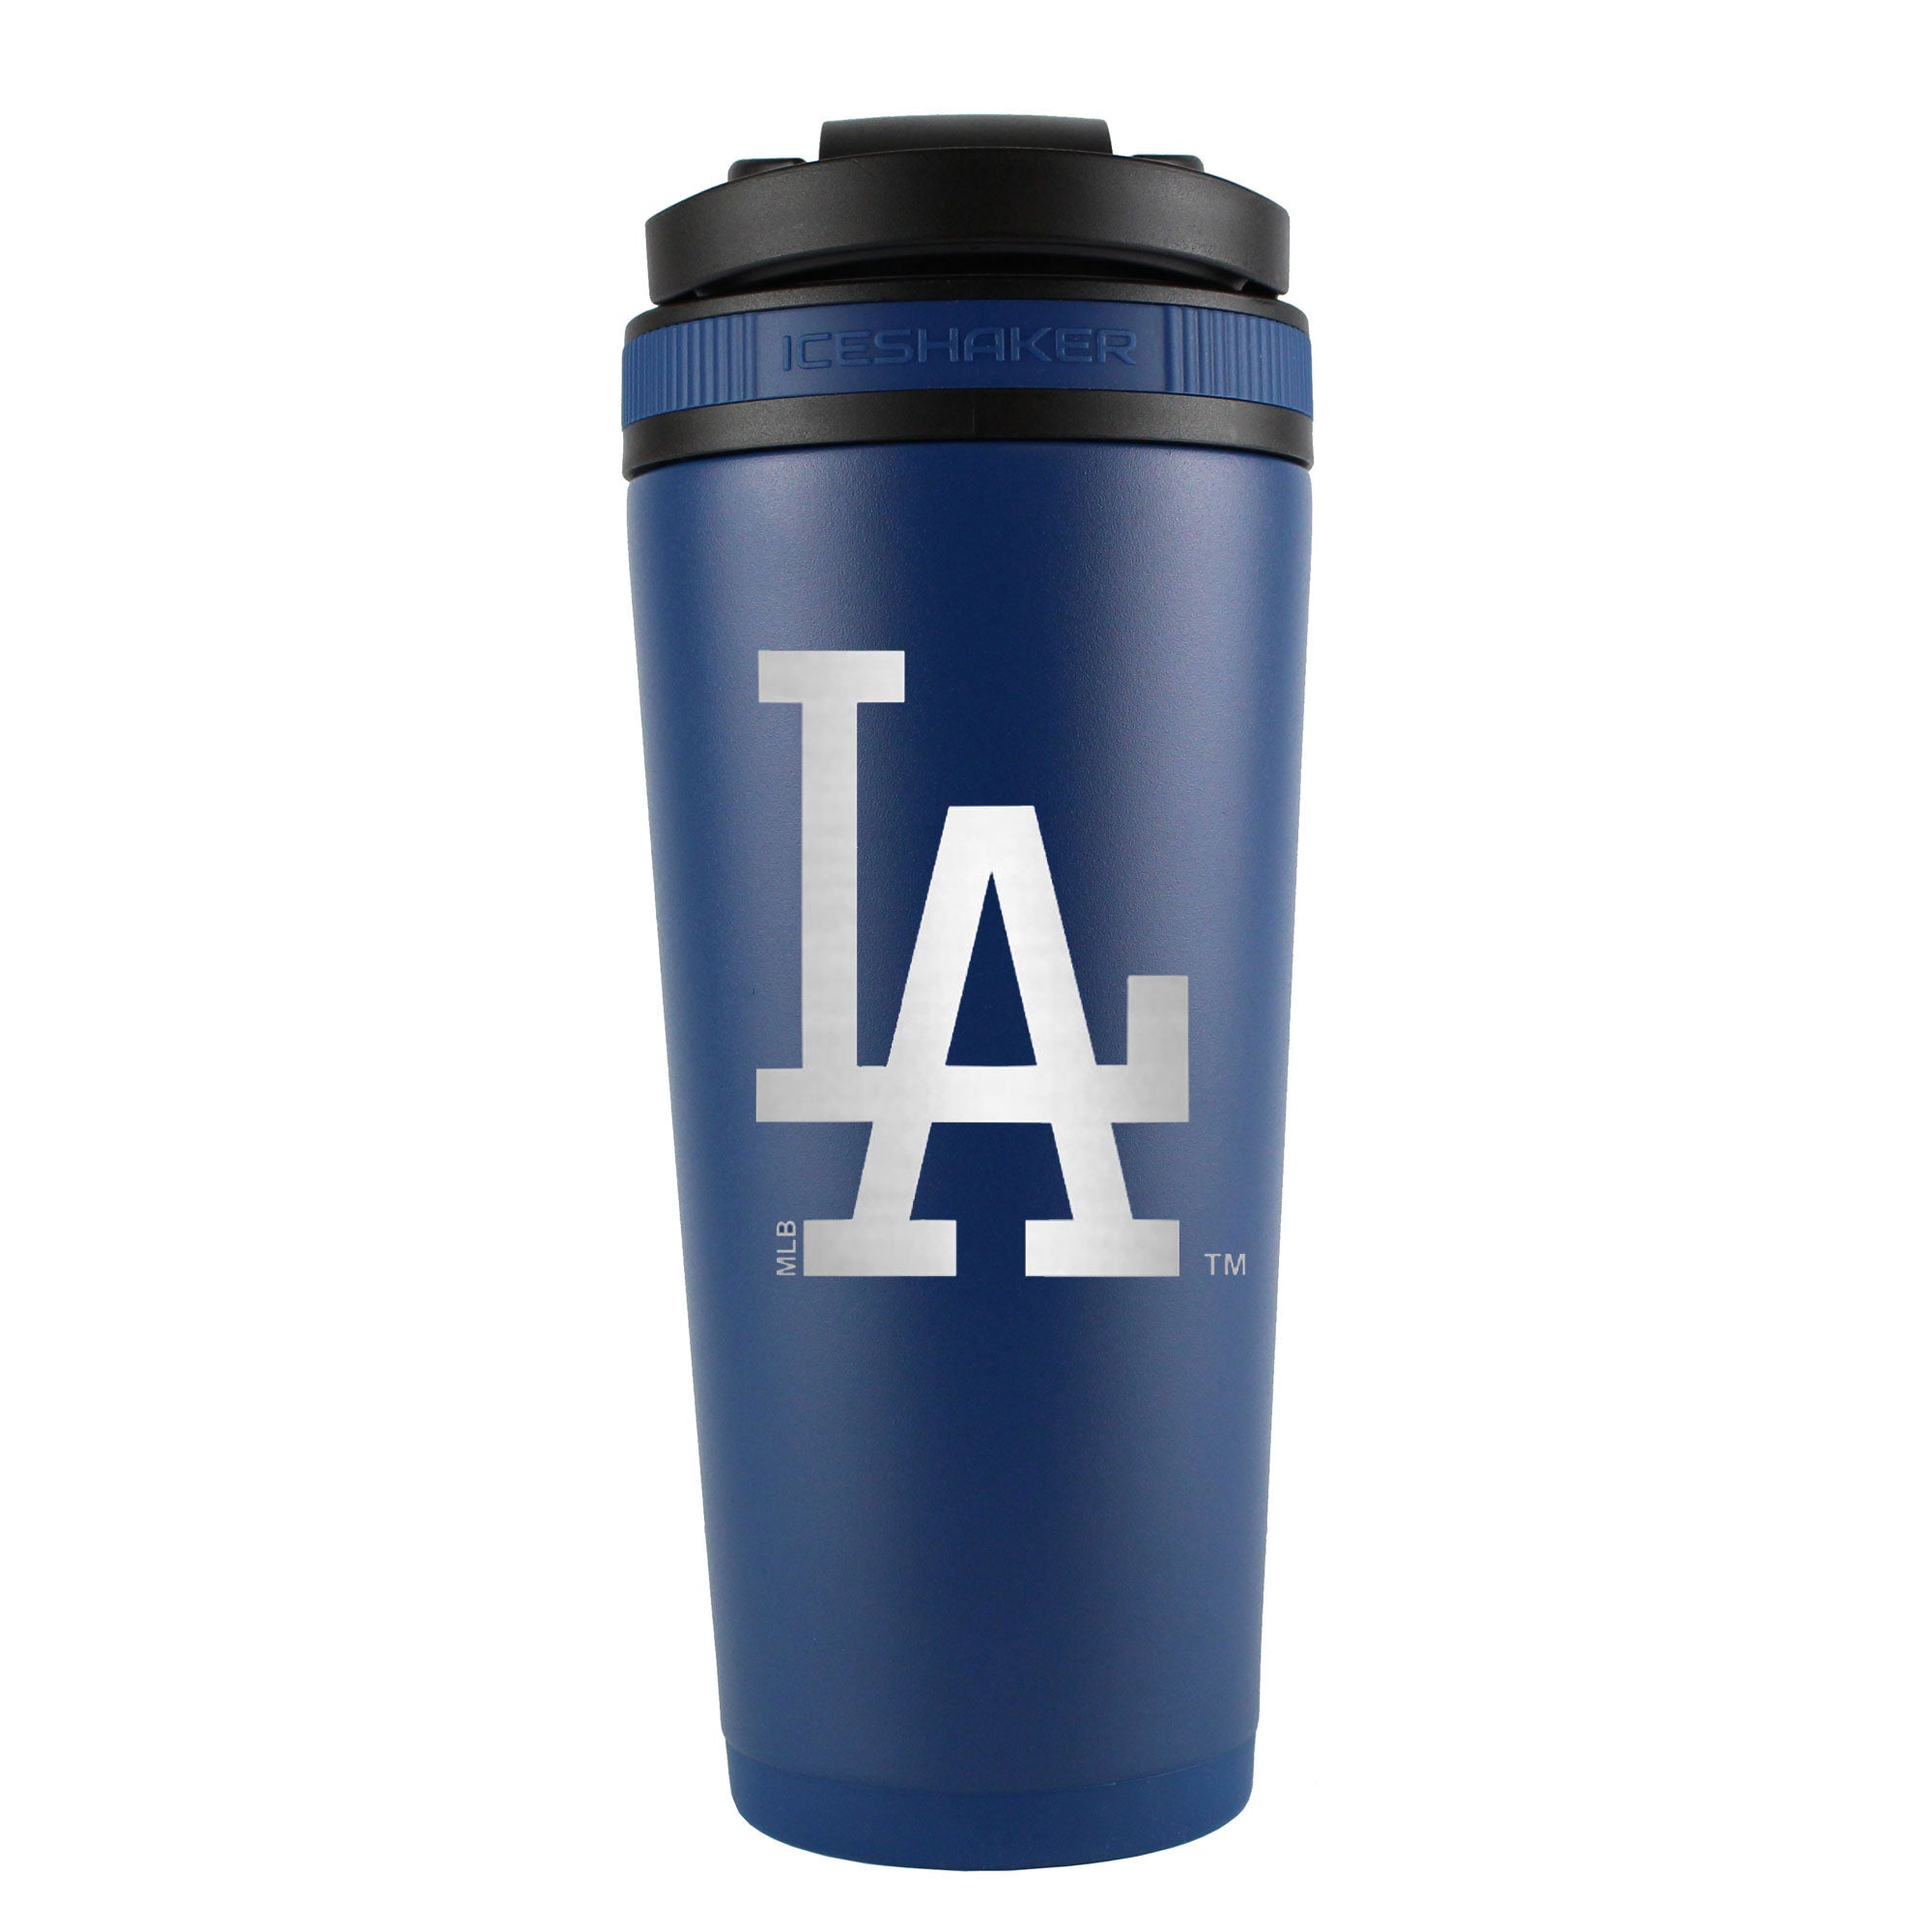 Officially Licensed Los Angeles Dodgers 26oz Ice Shaker (Alternate Logo) - Navy